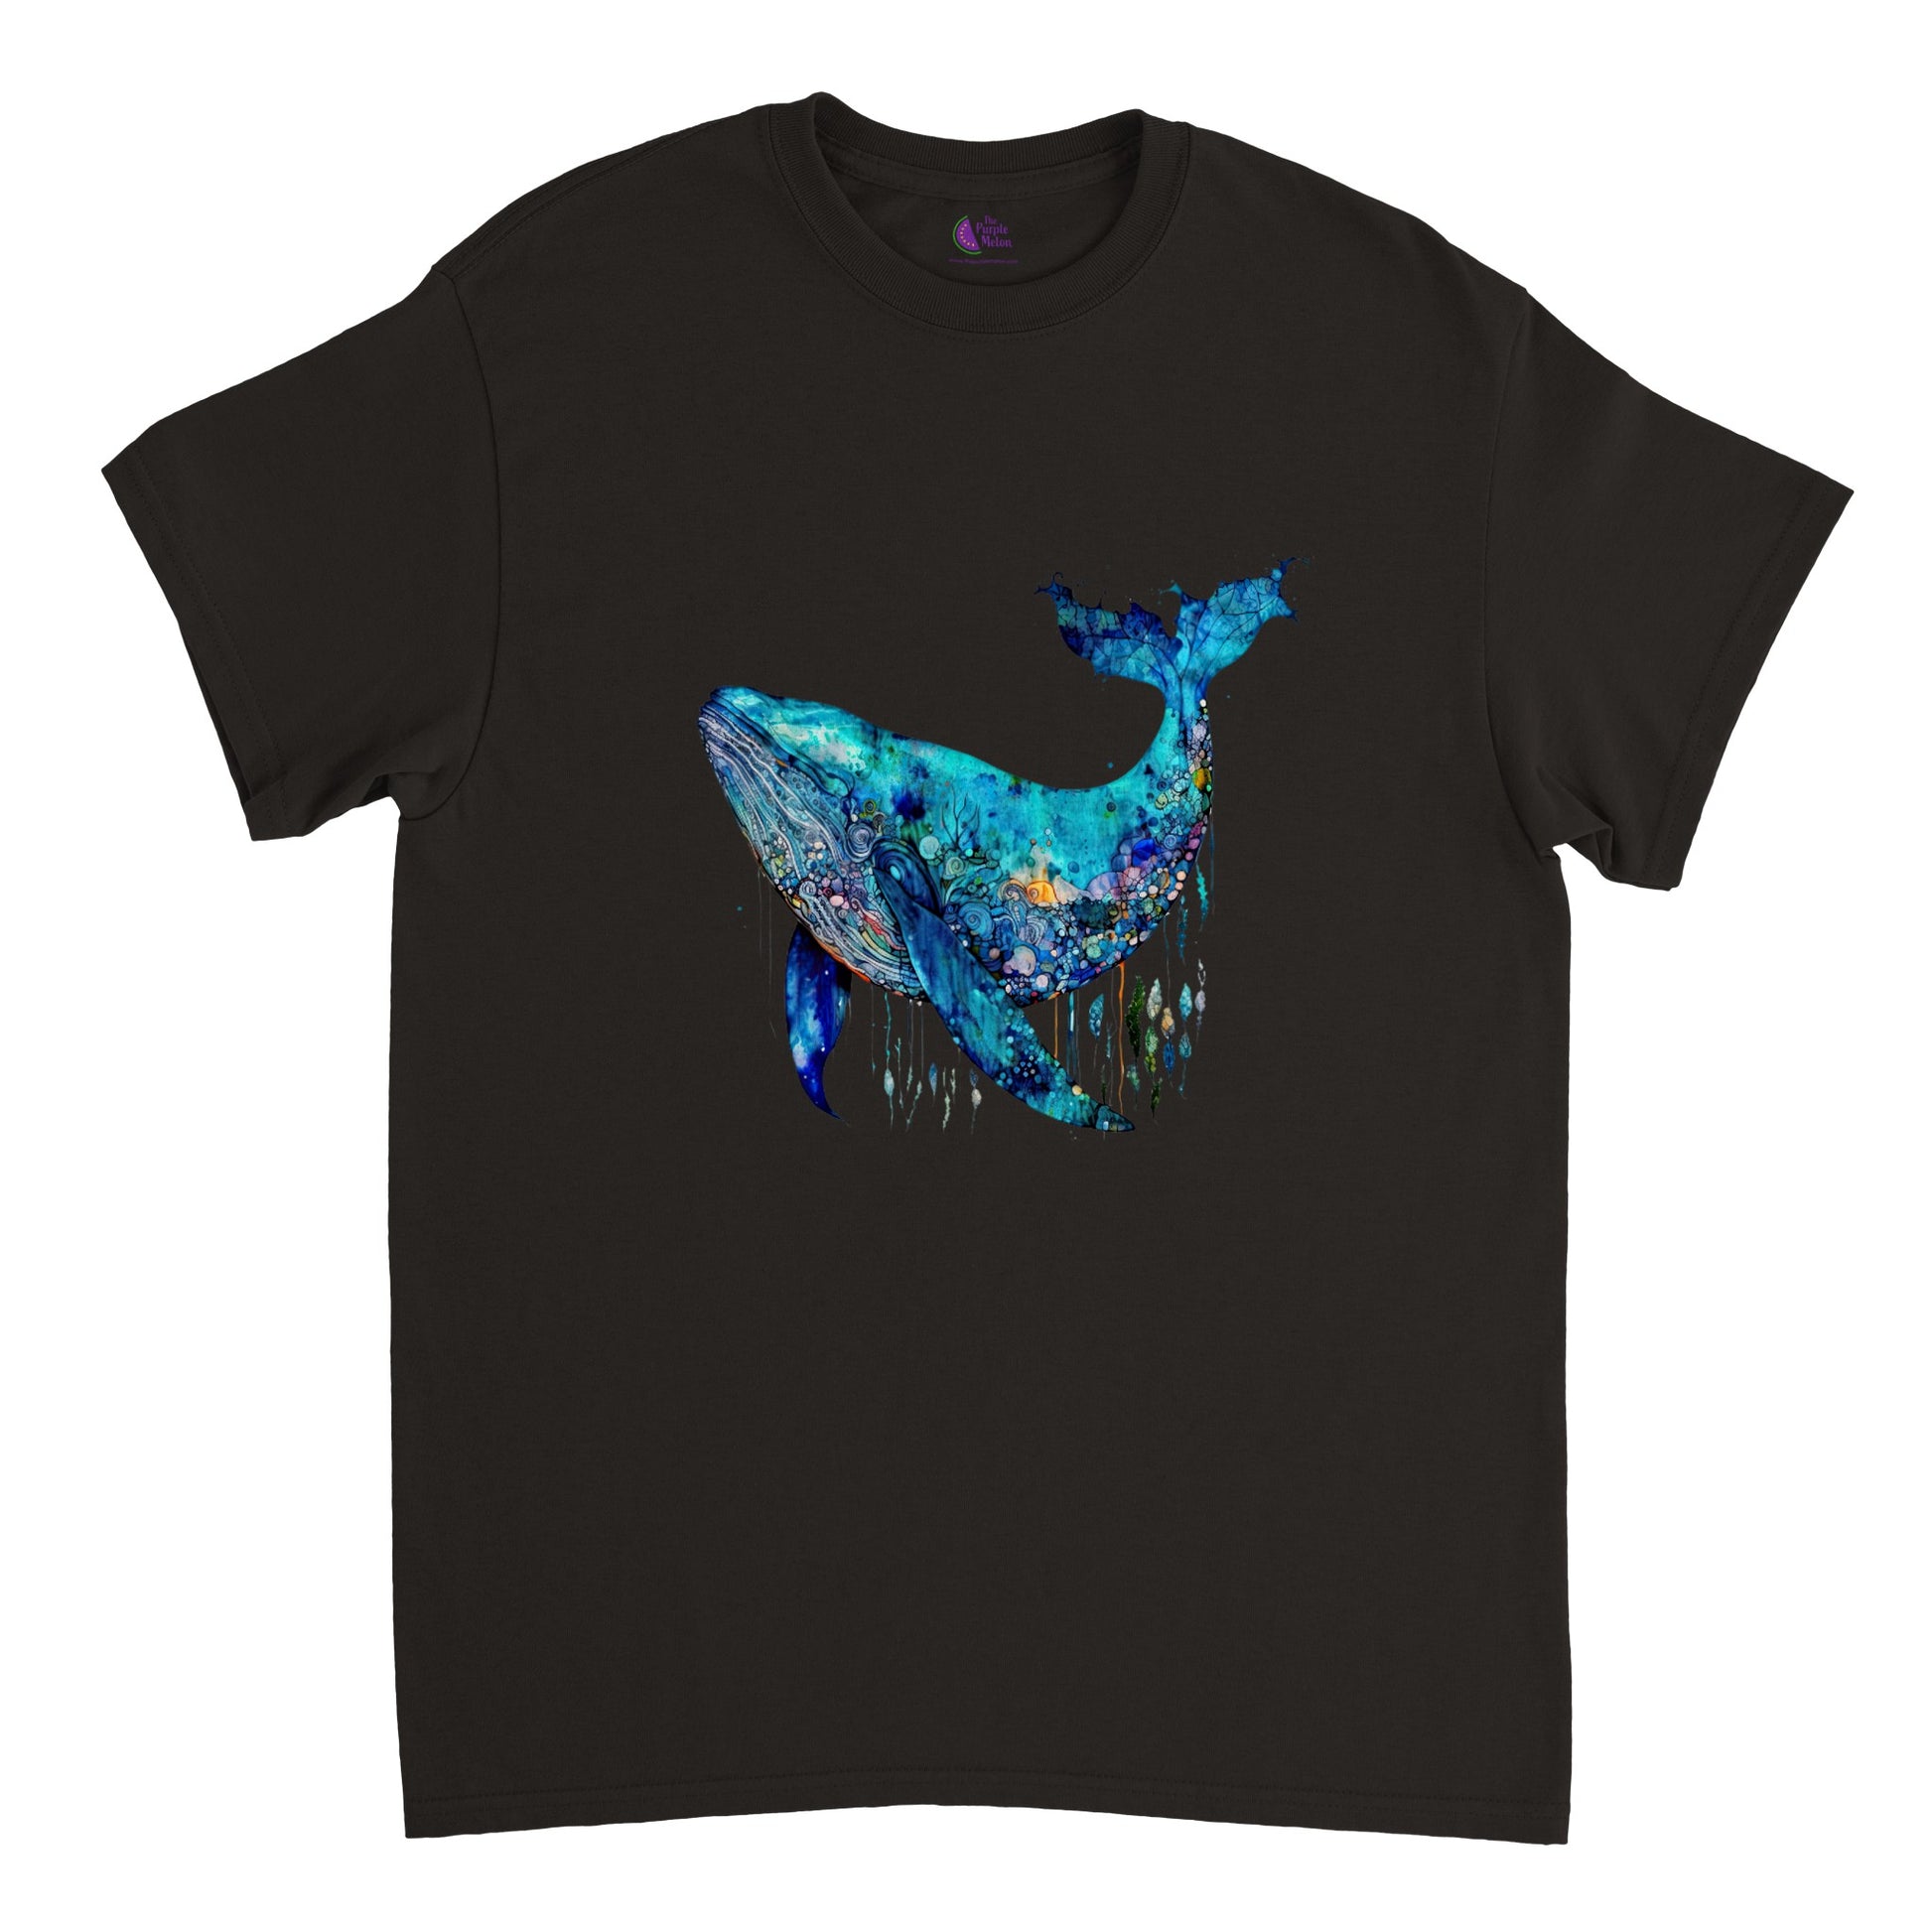 Black t-shirt with a blue whale print